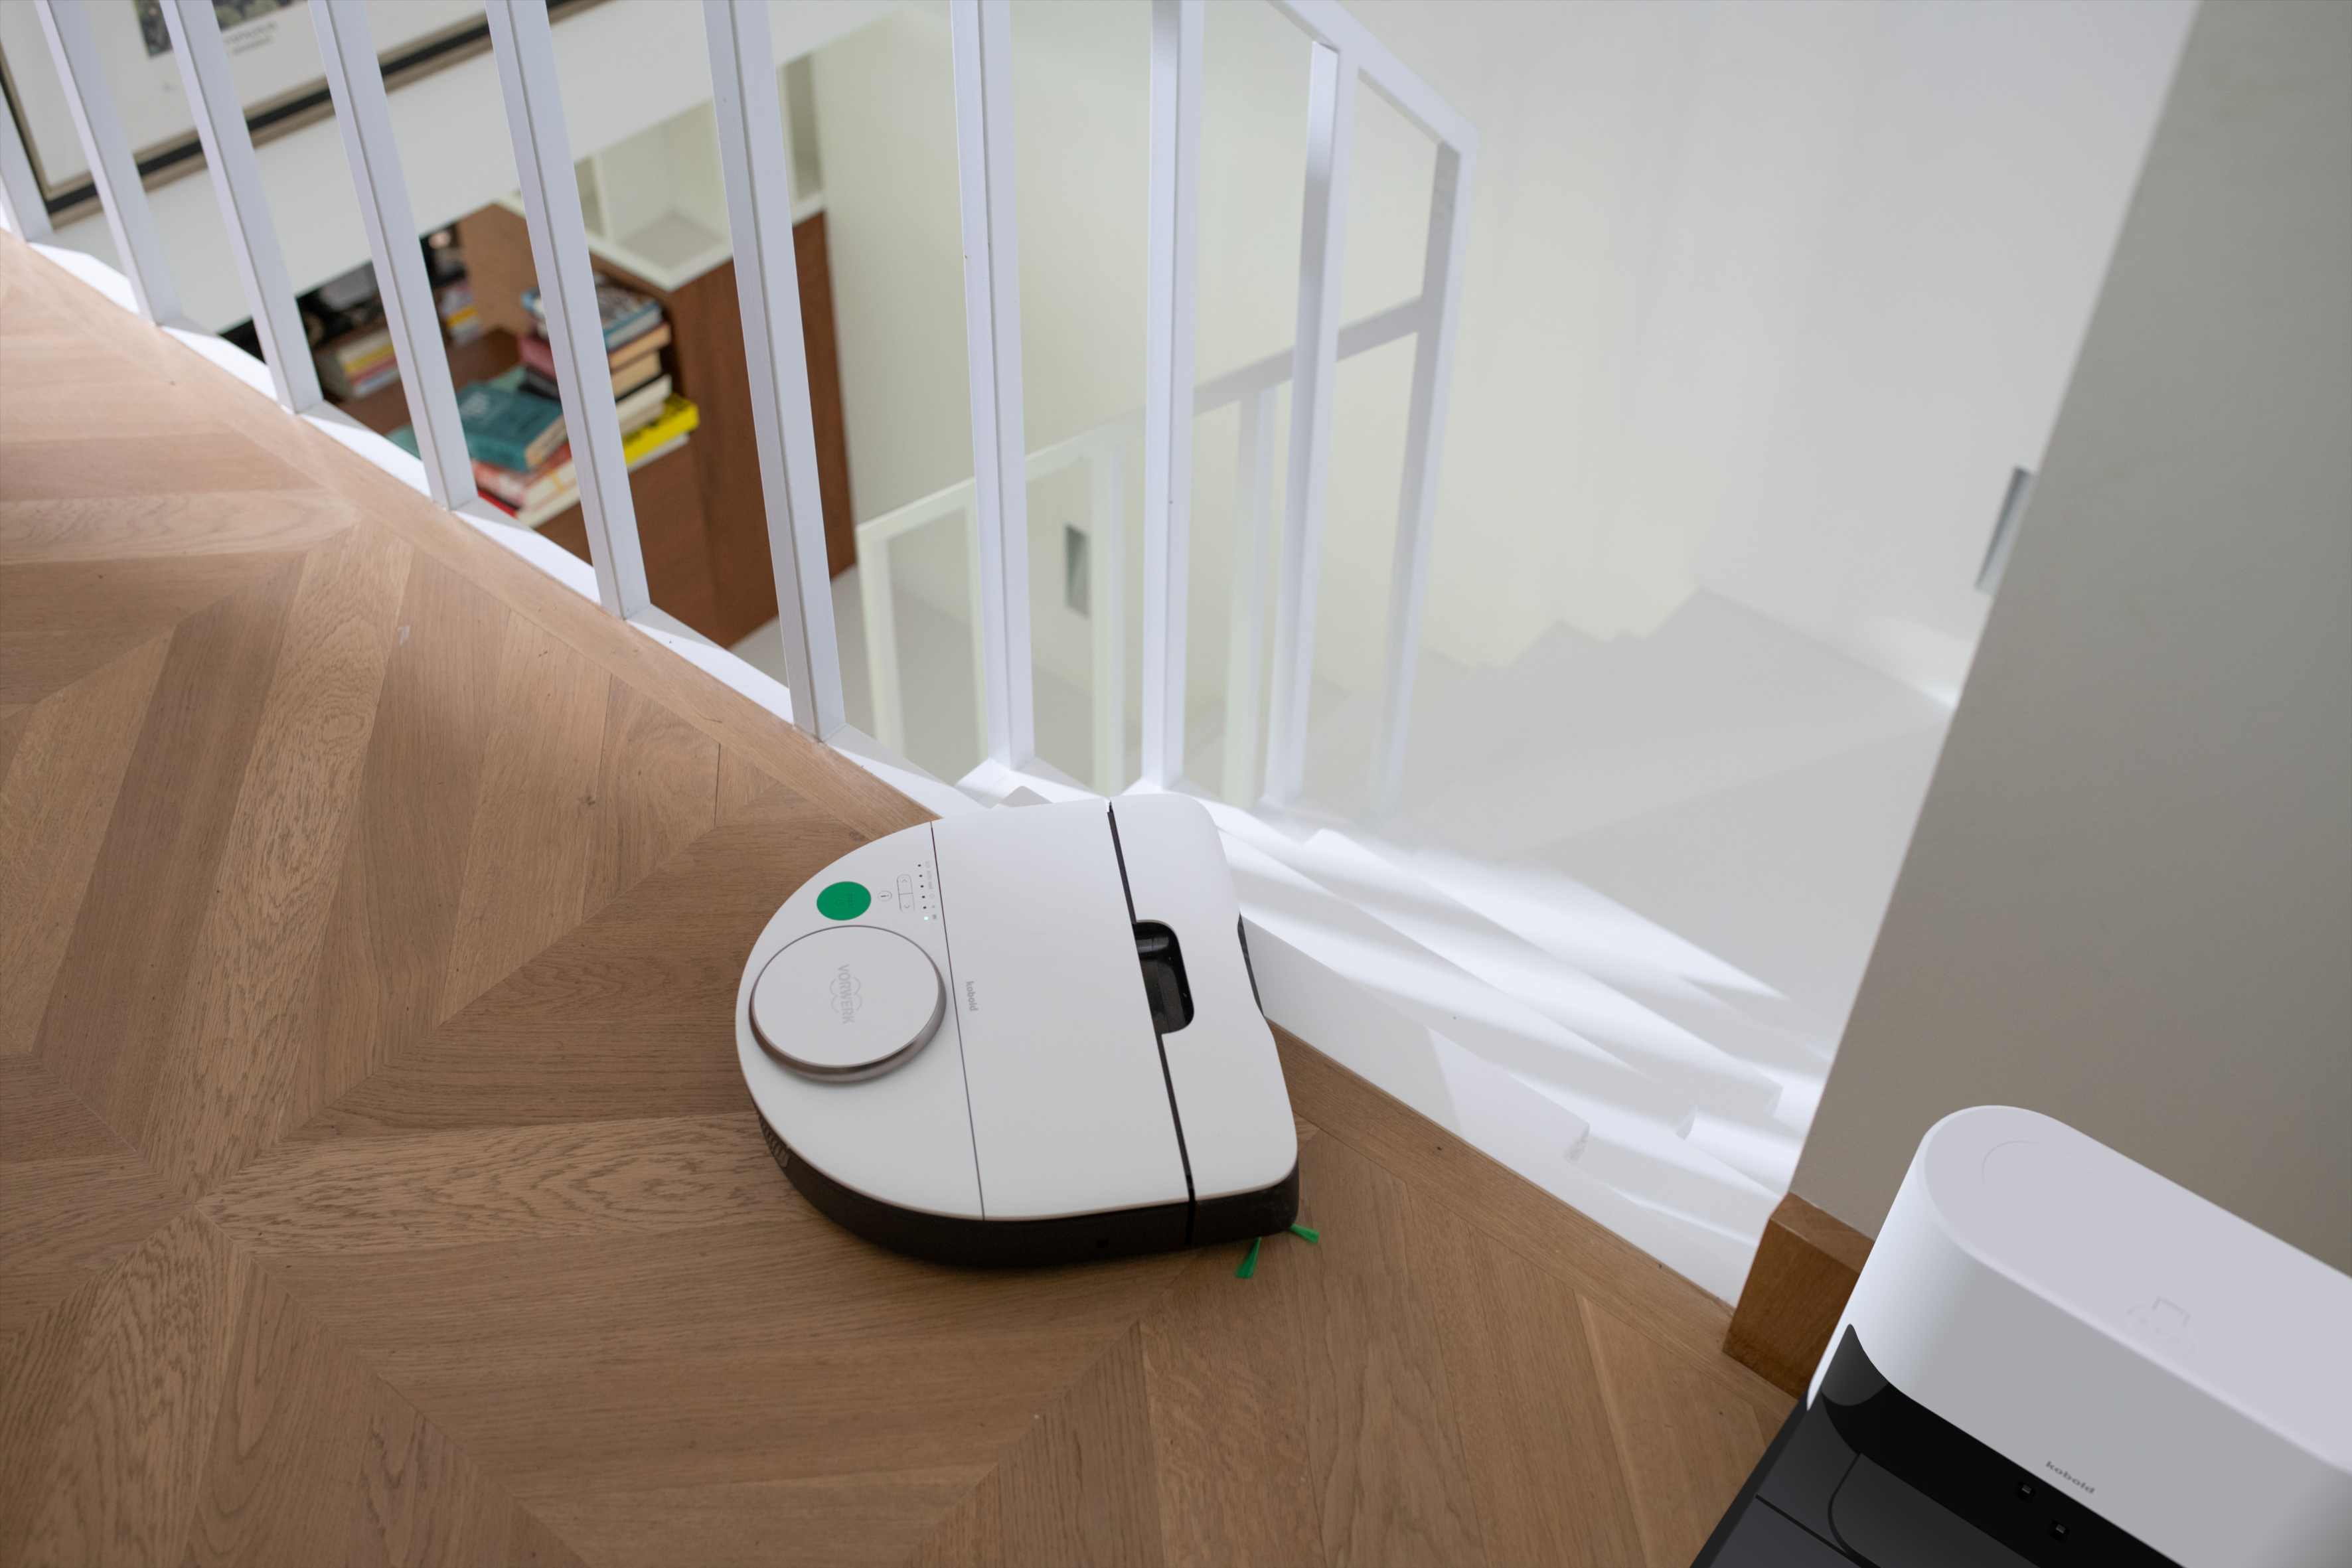 Vorwerk introduce el Robot Aspirador Kobold VR7 Premium